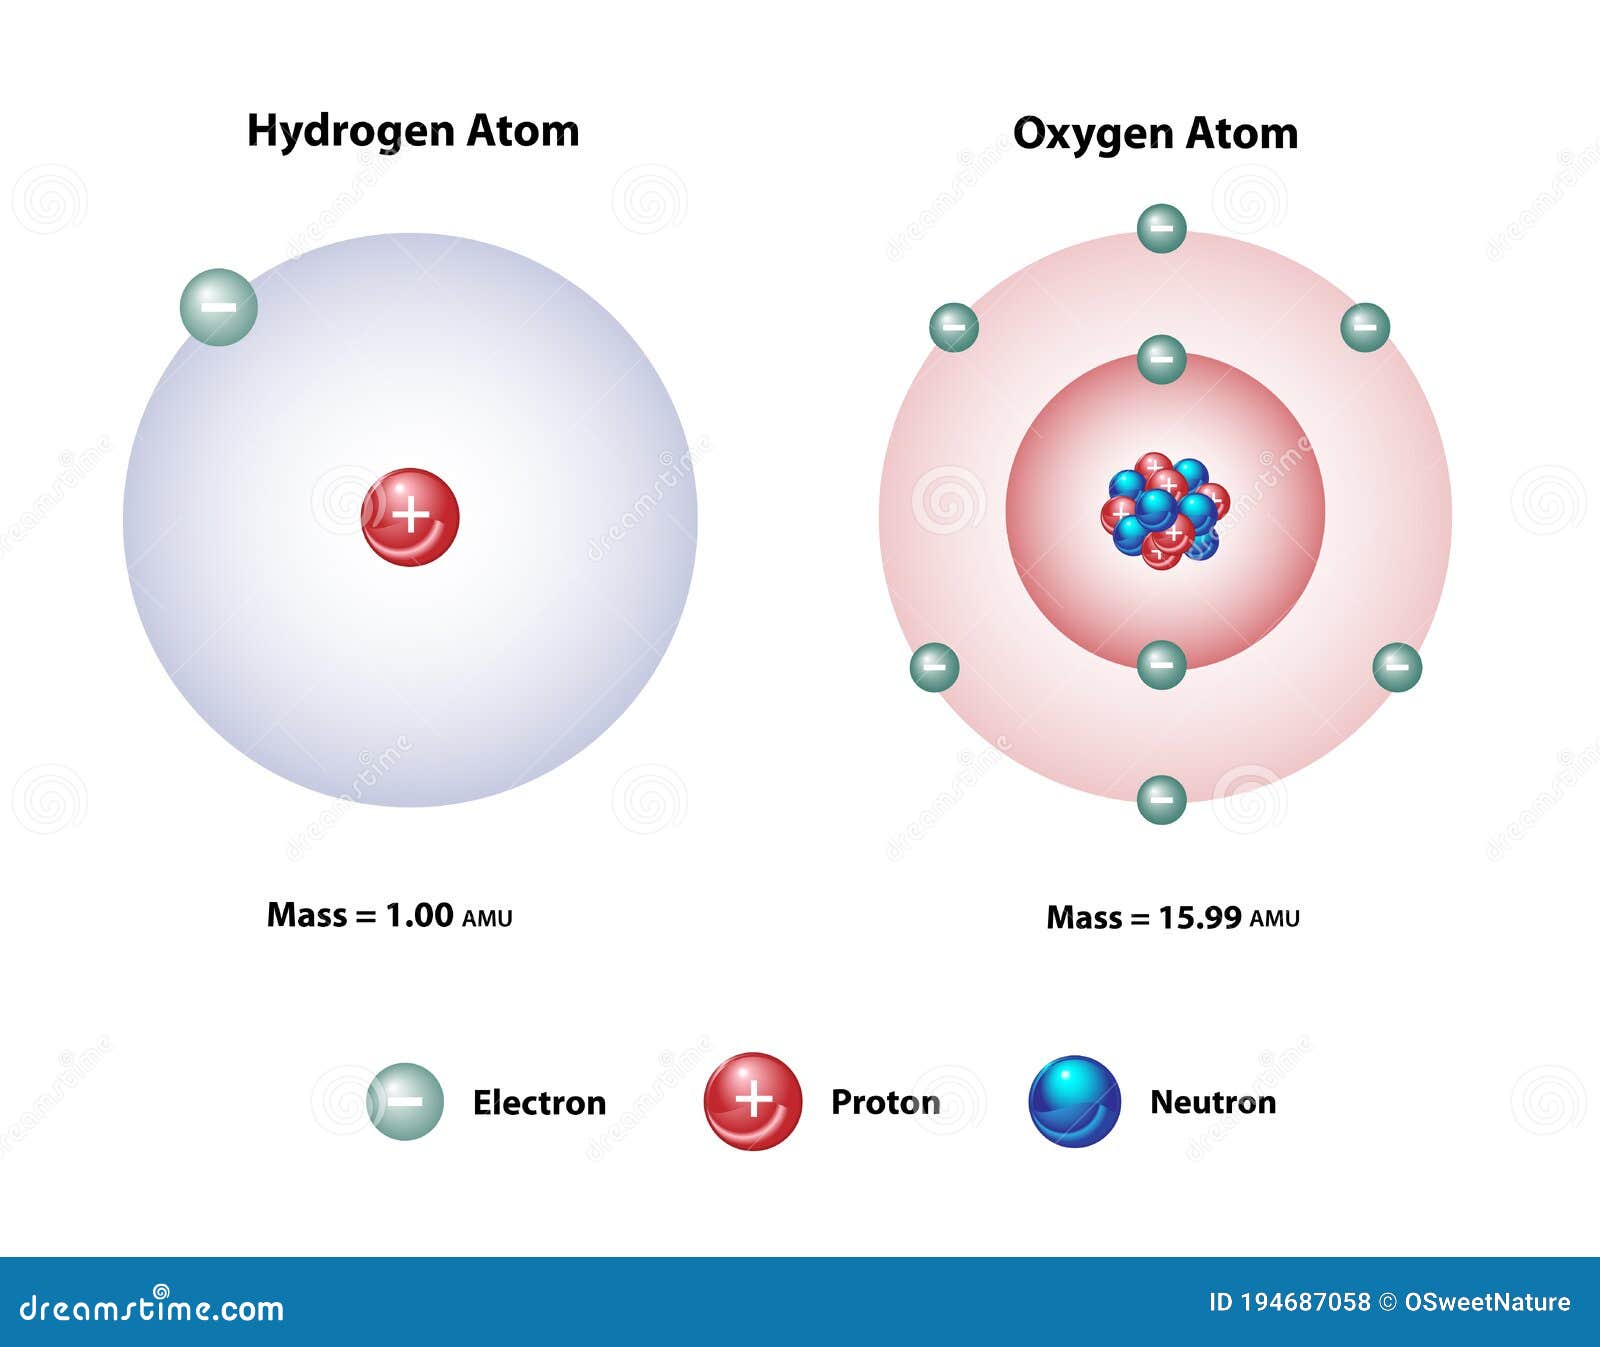 Бром электроны протоны. Атом кислорода. Протон и электрон нейтрон атома водорода. Атомы кислорода и водорода. Молекулярных атомов и ядер.